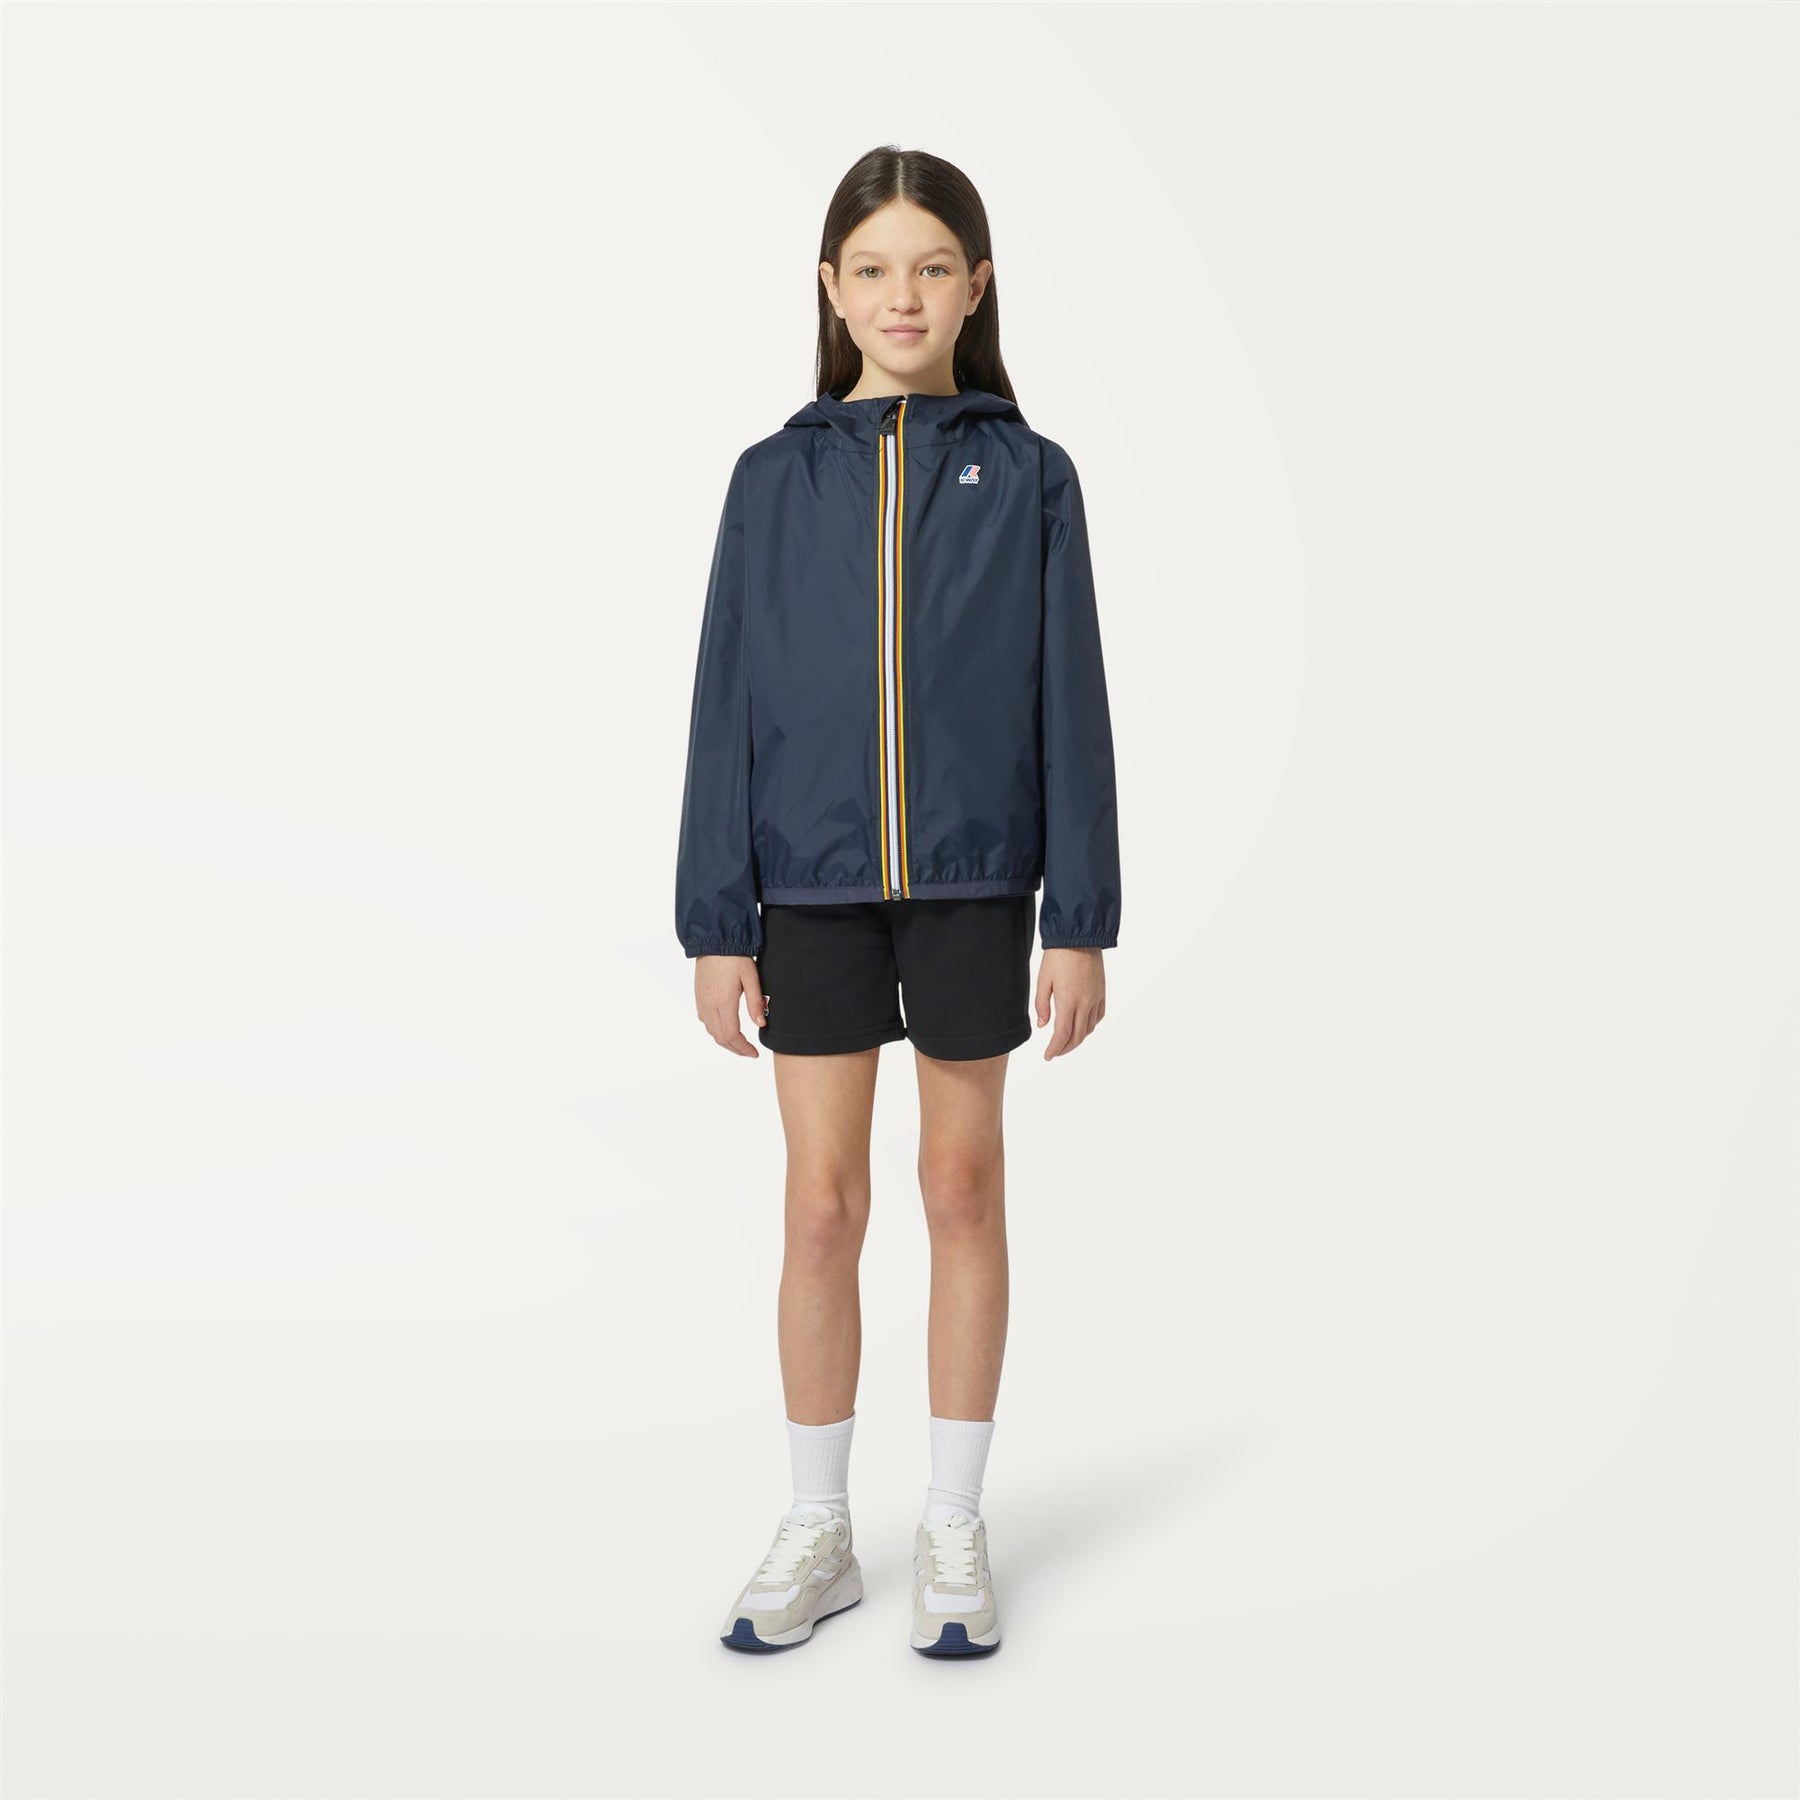 Claude - Kids Packable Full Zip Rain Jacket in Blue Depht